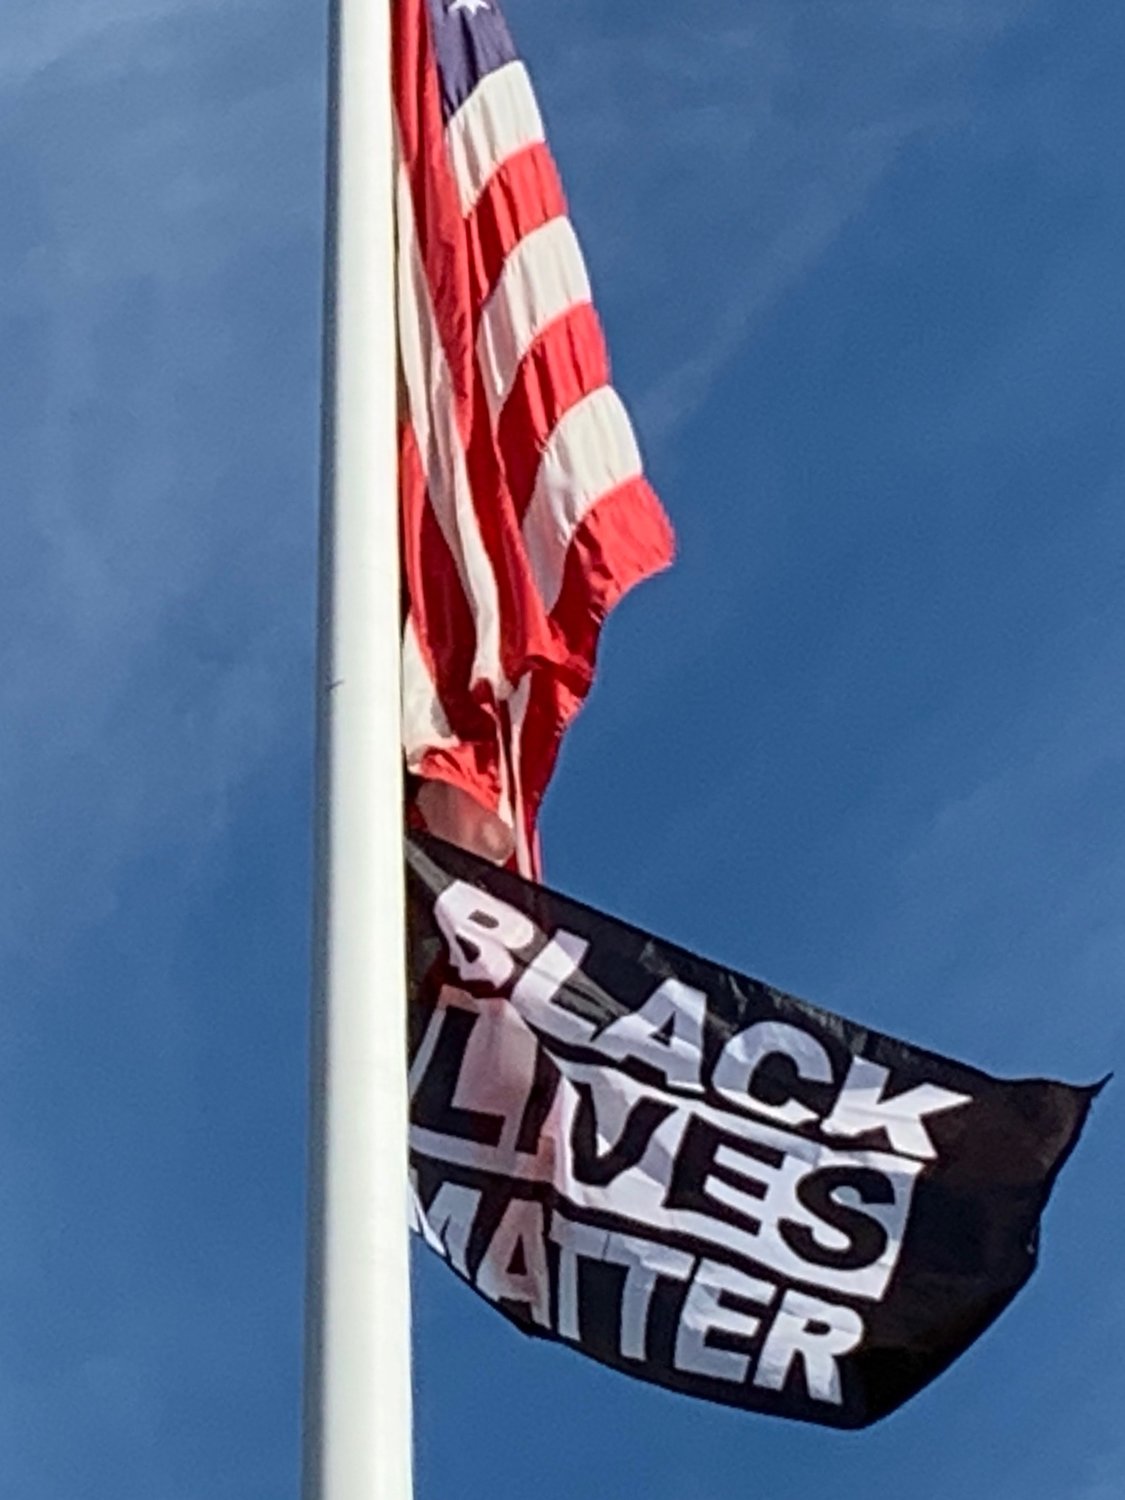 The Black Lives Matter flag flies on the pole outside Barrington Town Hall.